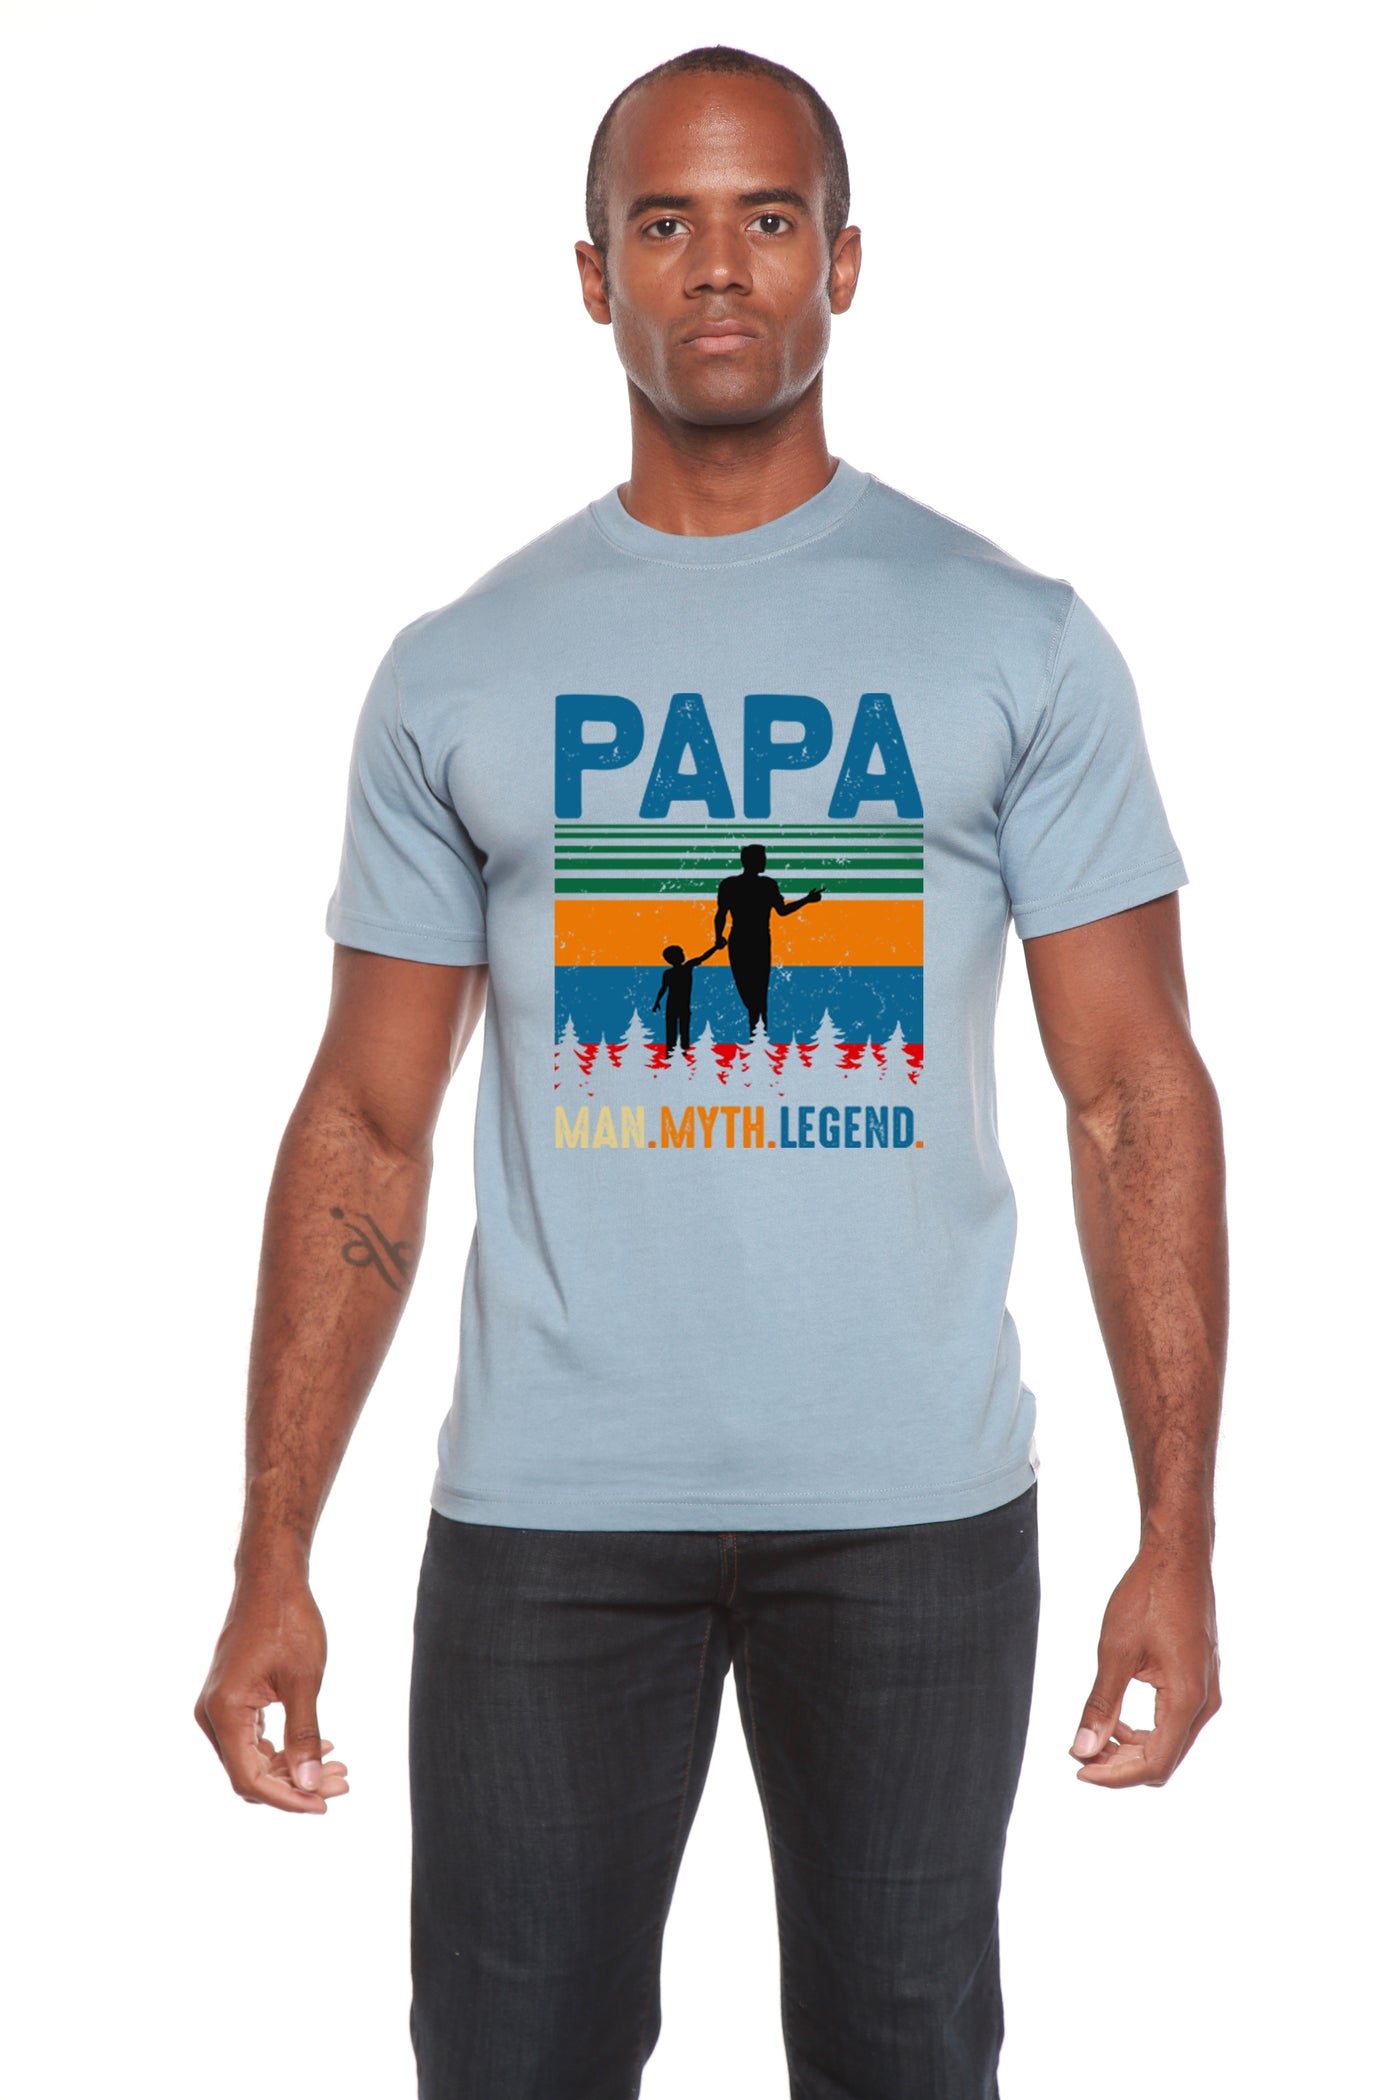 Papa Man, Myth, Legend Men's Bamboo Viscose/Organic Cotton Short Sleeve Graphic T-Shirt